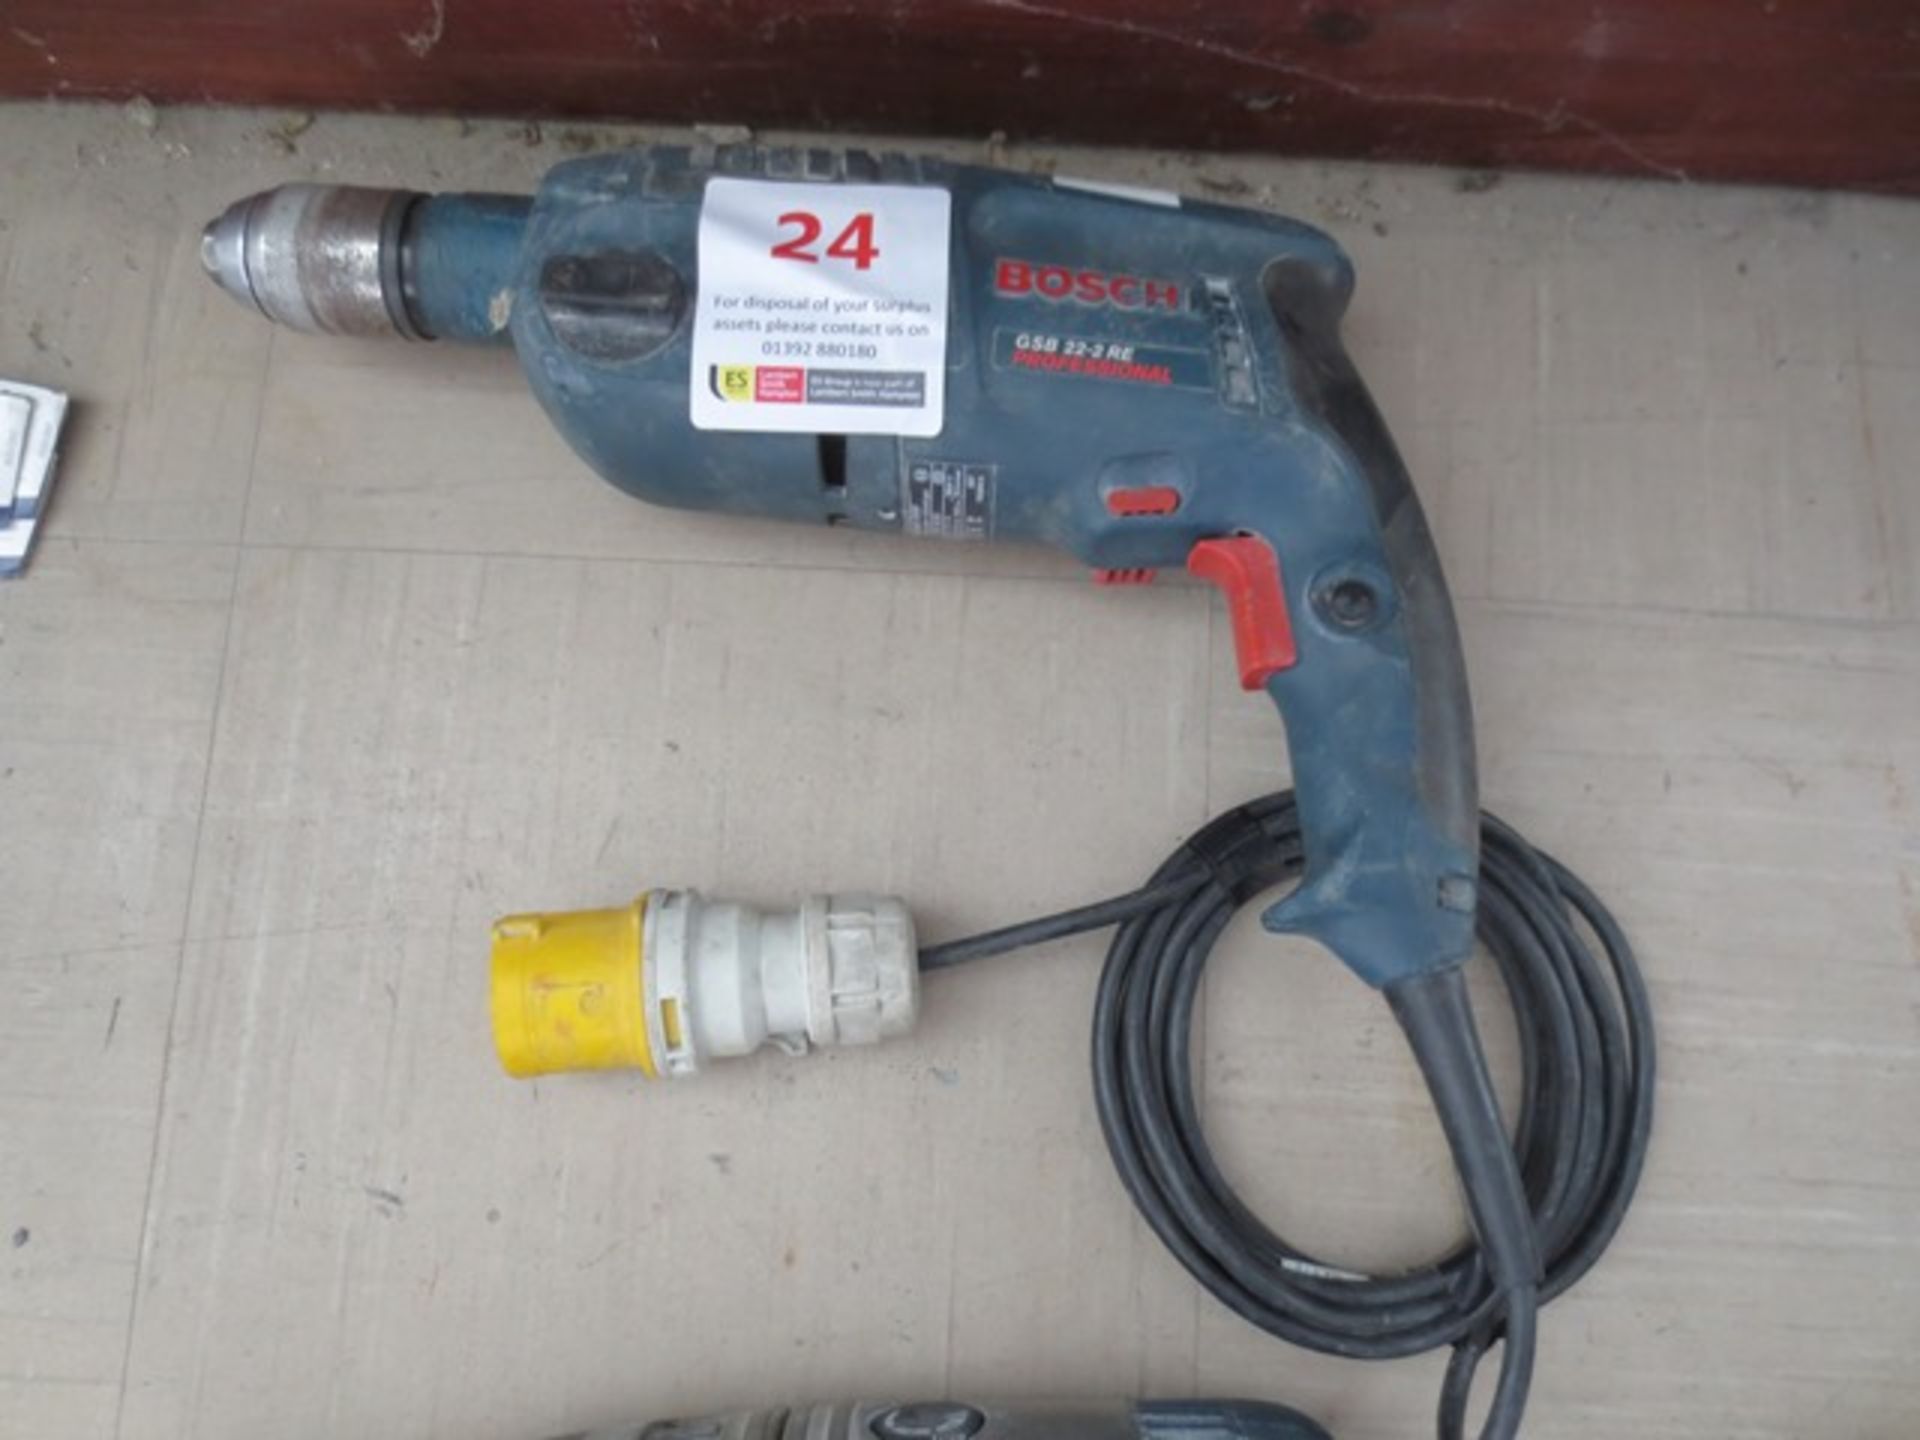 Bosch GSB 22-2RE 110v powered drill, serial no: 792000015 (2007)